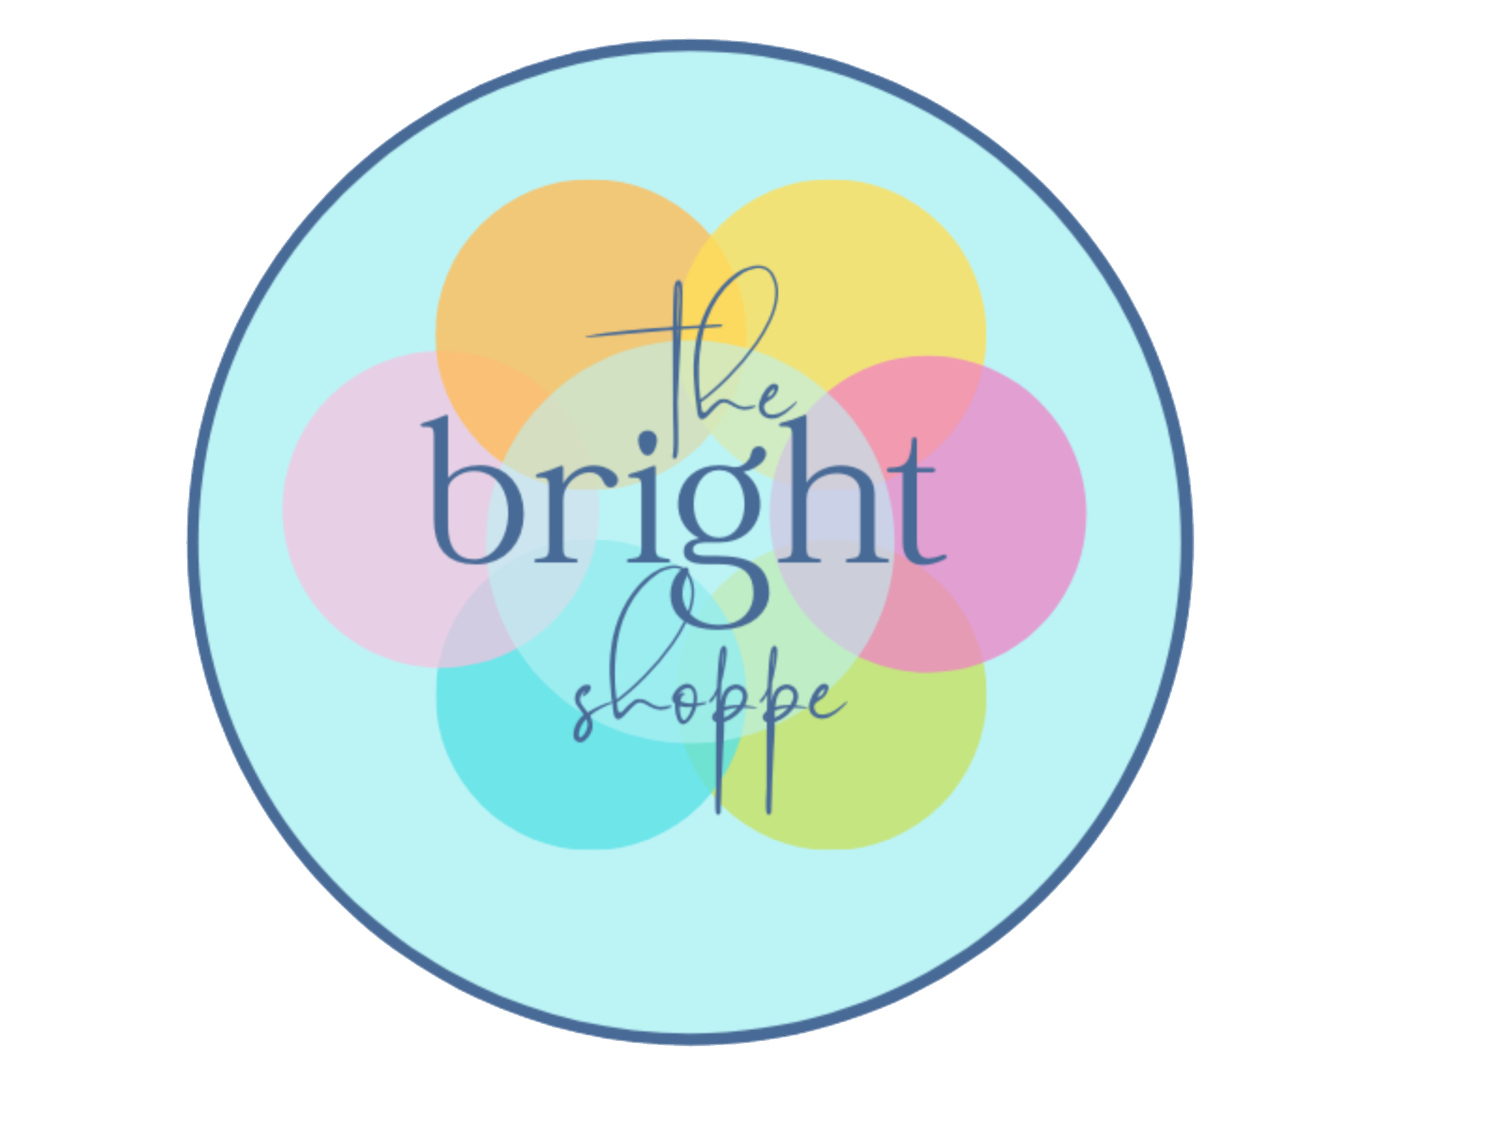 thebrightshoppe janet bright artist art studio